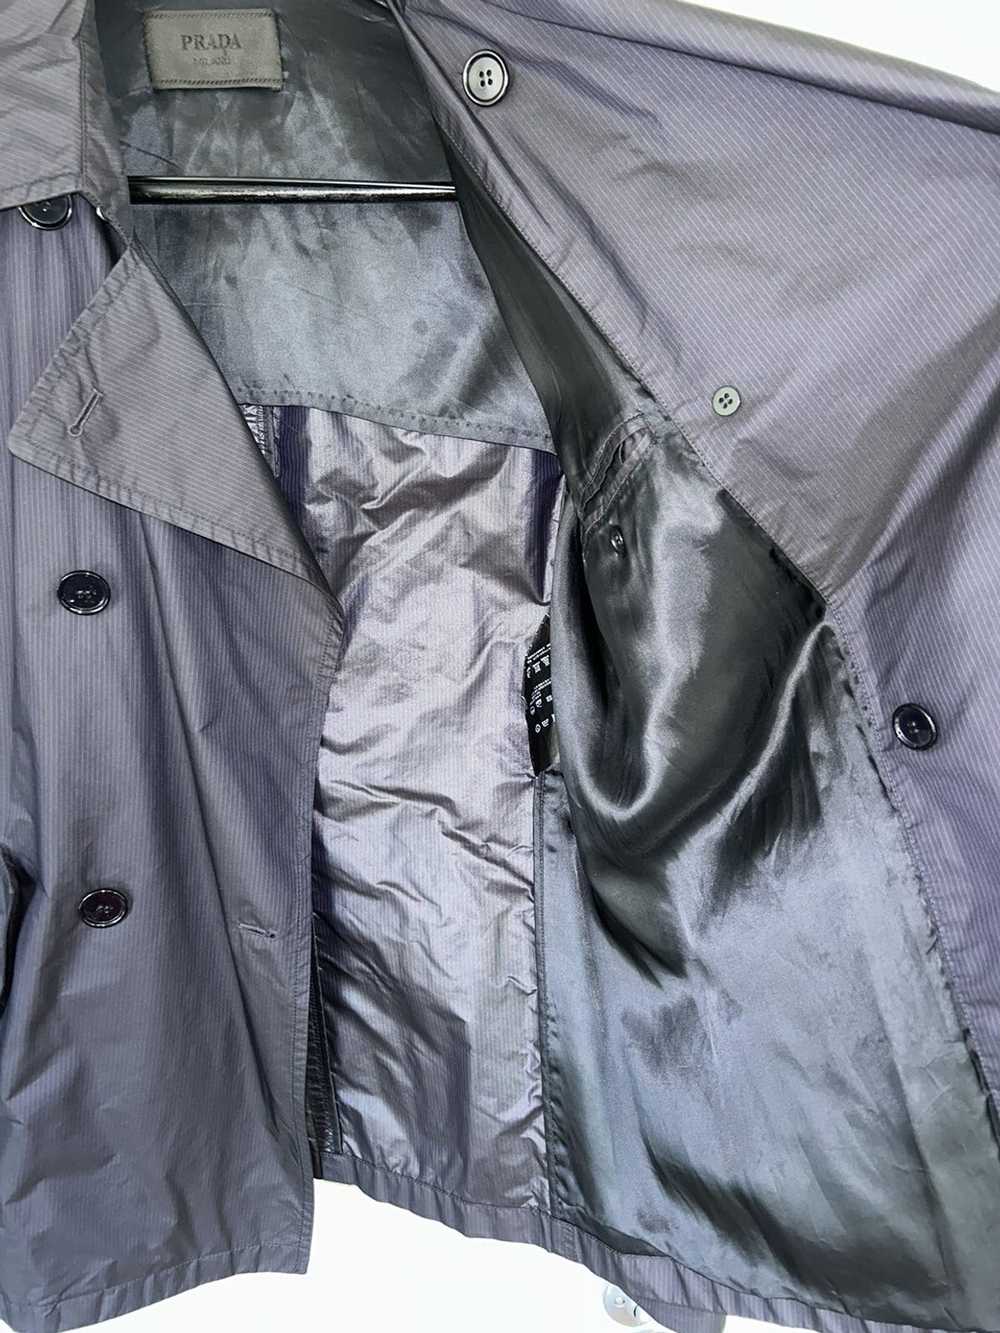 Prada Prada Raincoat Jacket - image 5